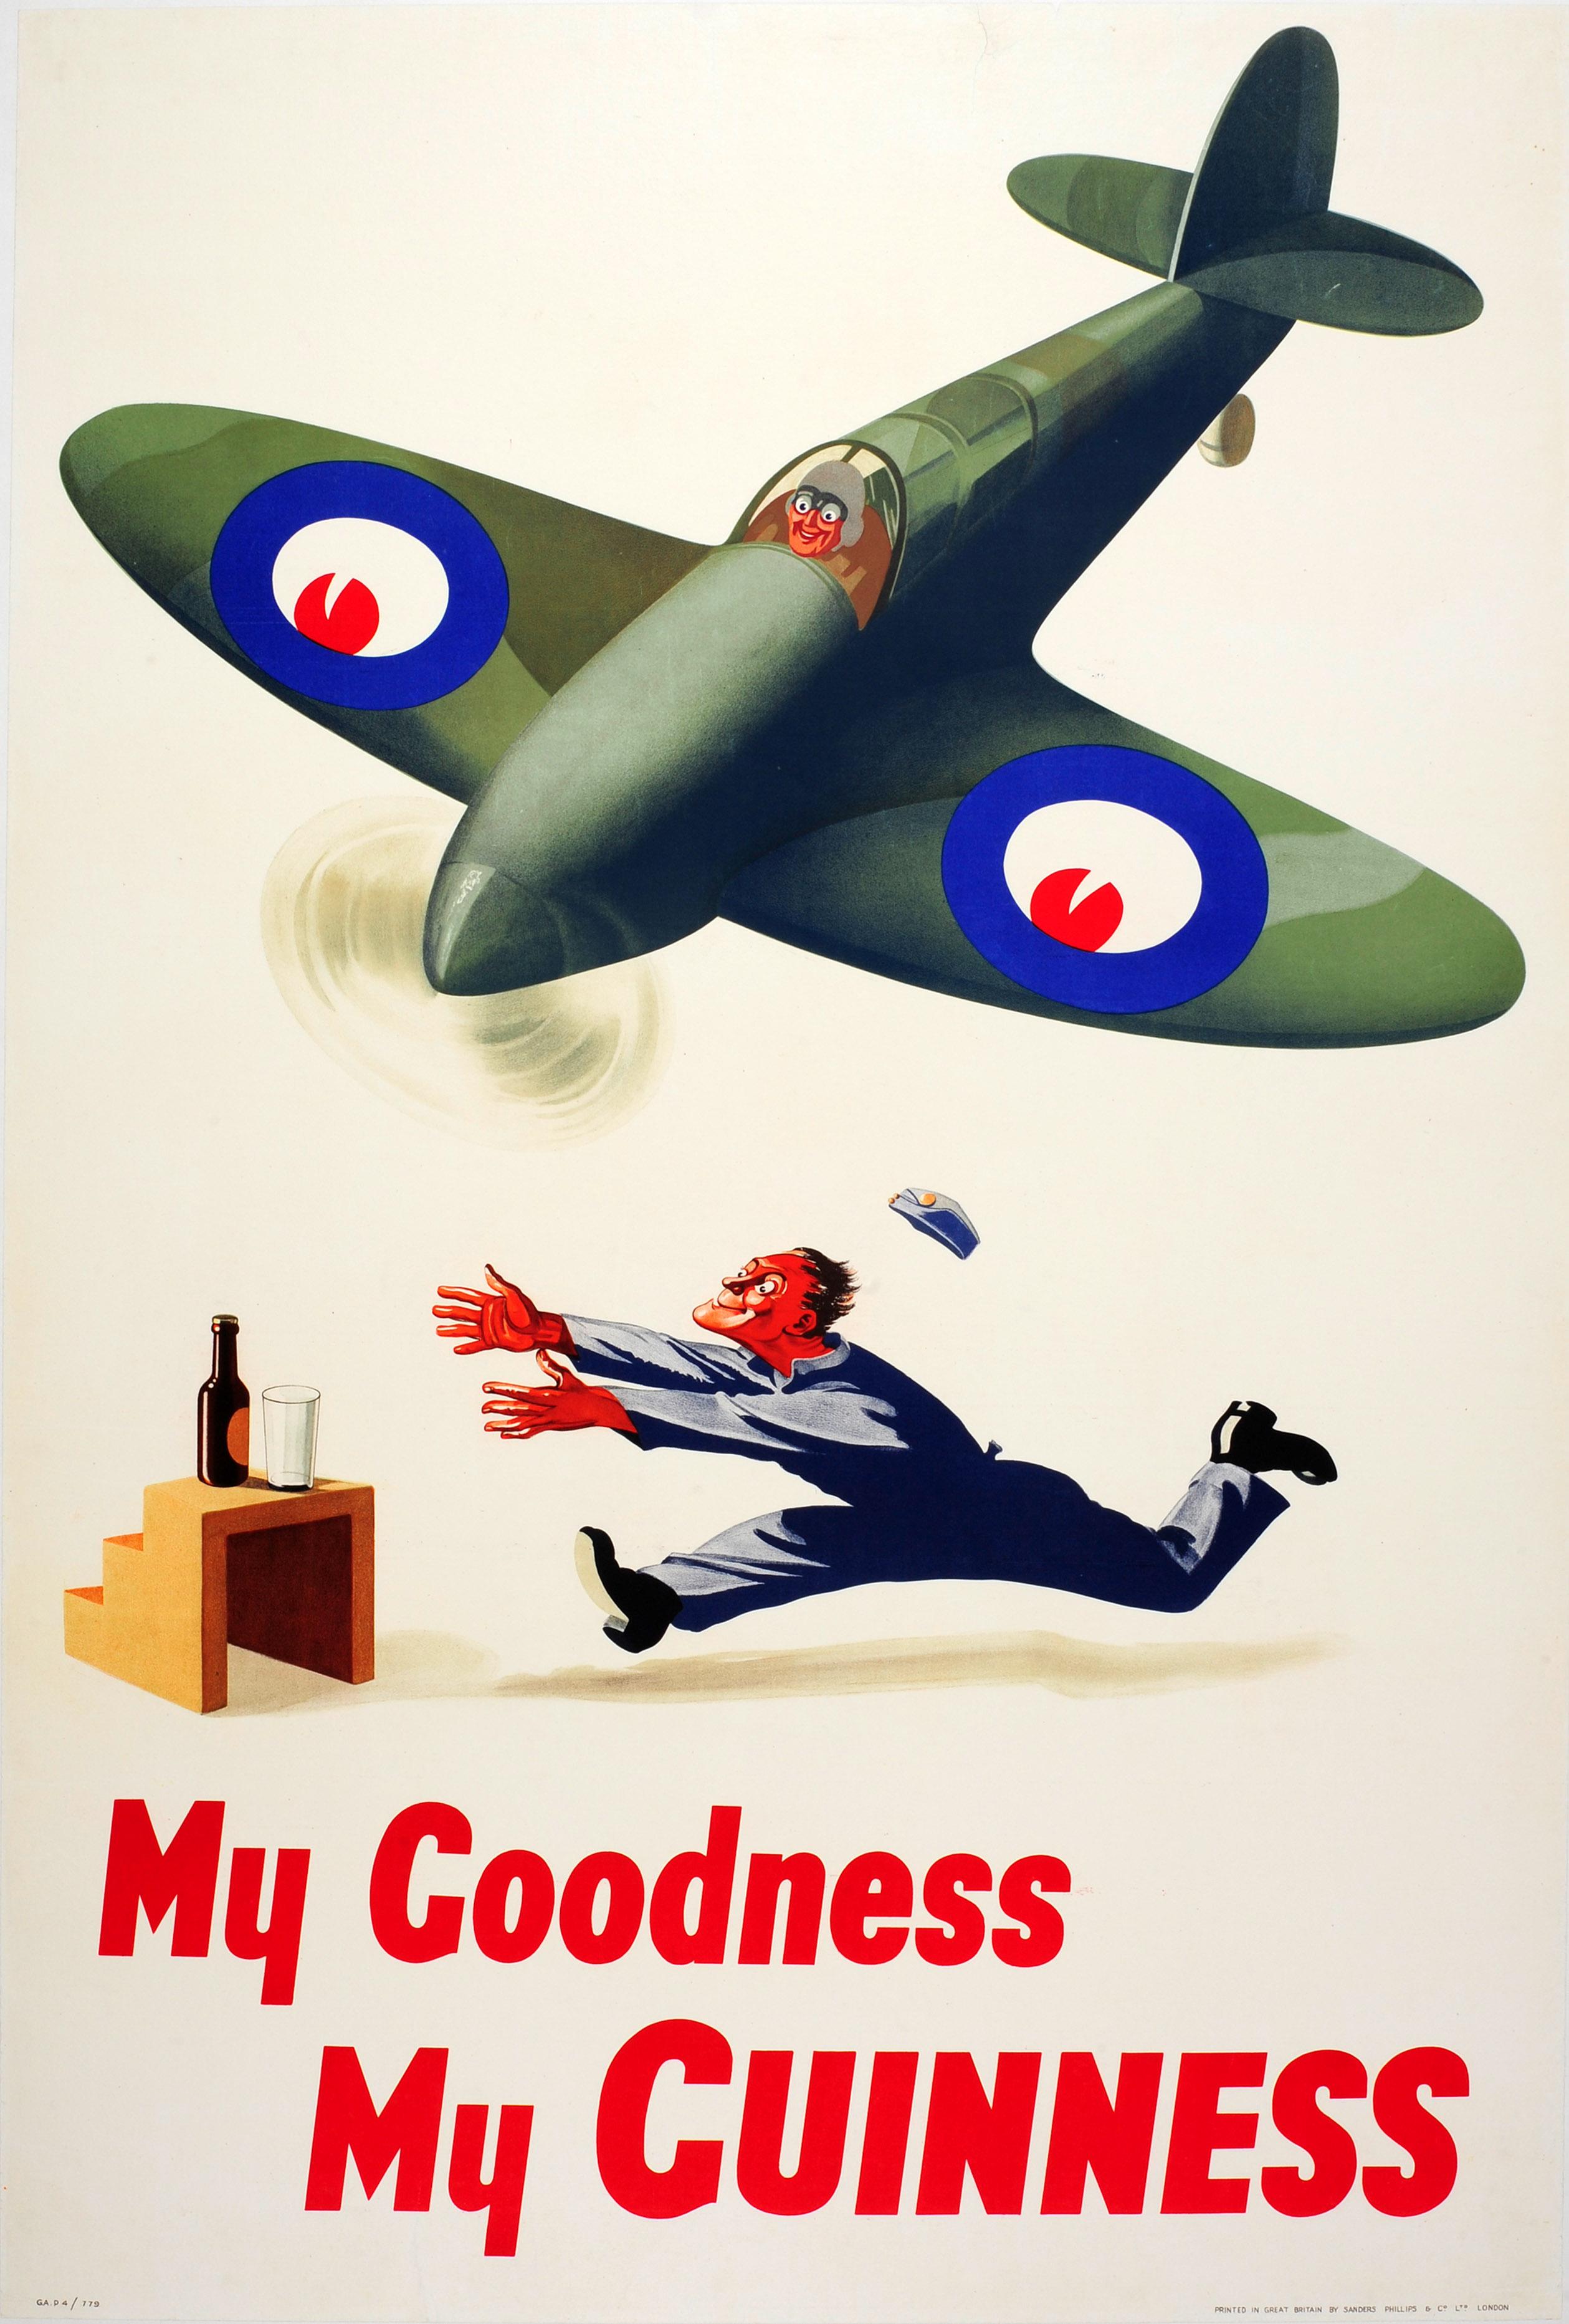 John Gilroy Print - Original Vintage My Goodness My Guinness Poster Drink Race RAF Spitfire Design